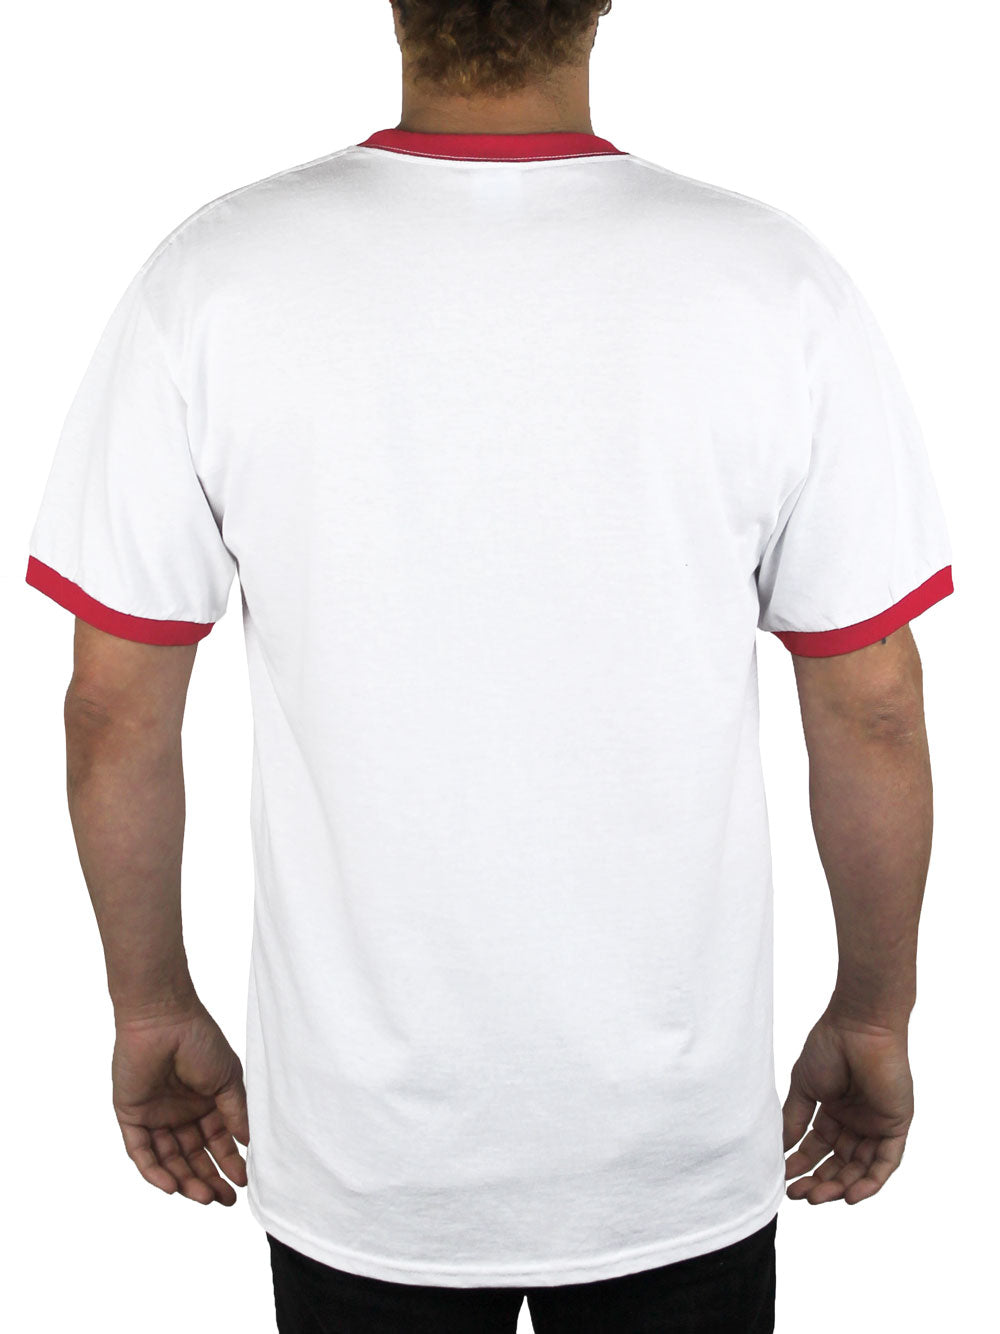 Clifton Ringer T-Shirt Back View